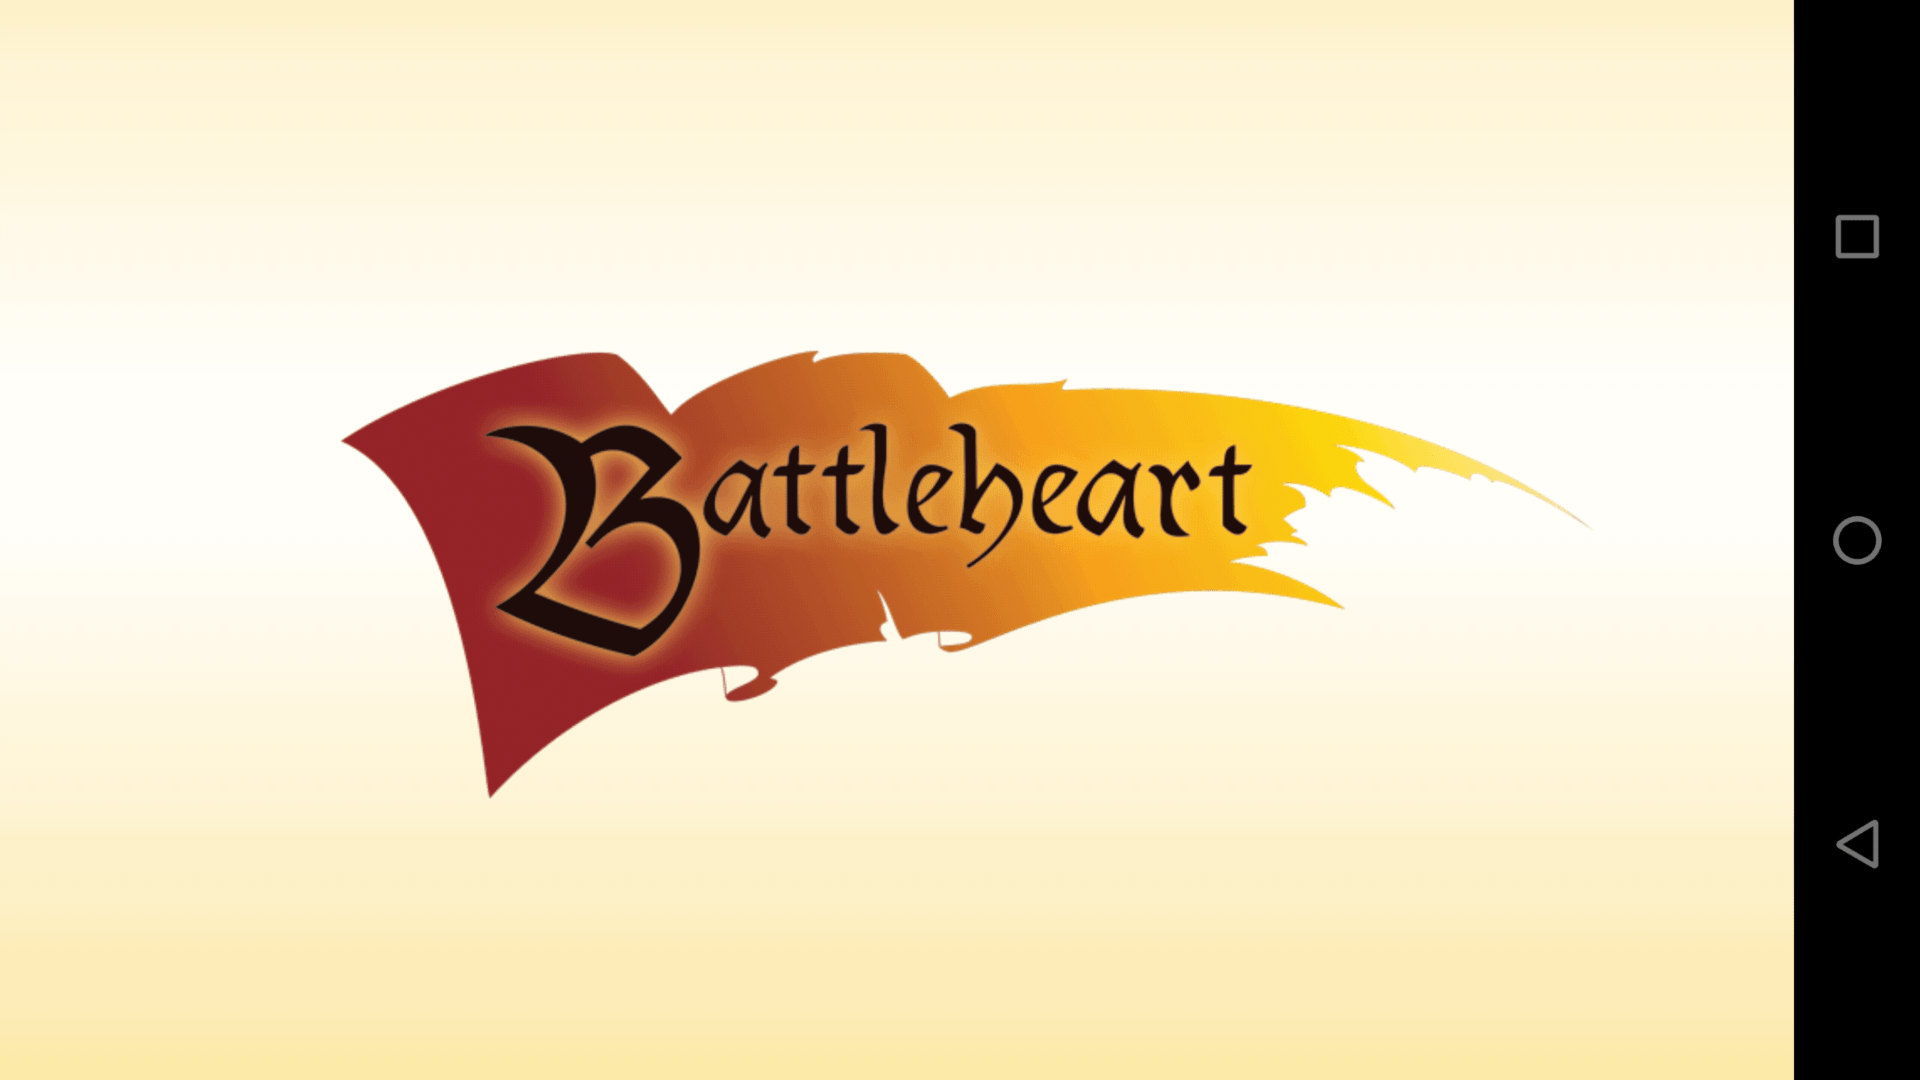 Battle hearts. Battleheart Legacy.